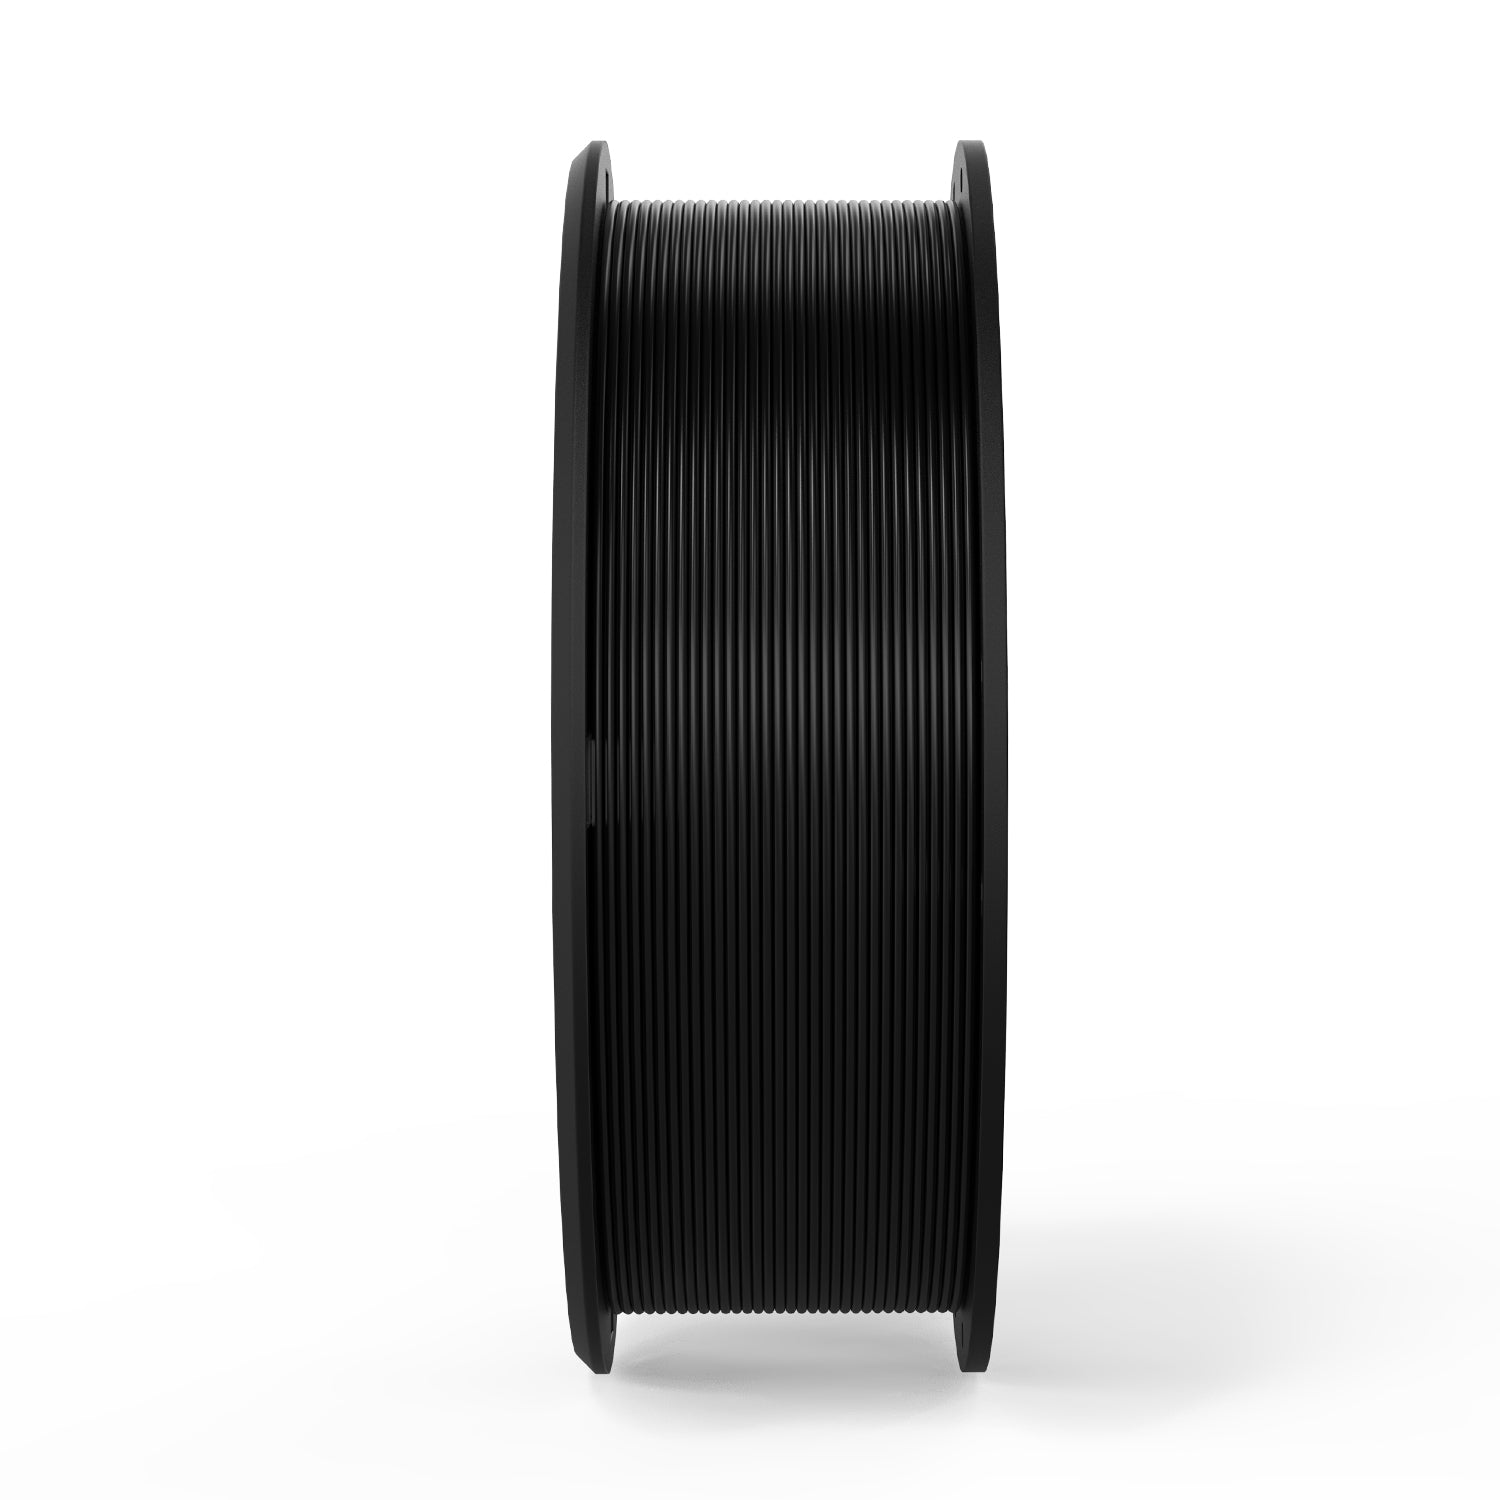 ERYONE ABS 3D Printer Filament 1.75mm, Dimensional Accuracy +/- 0.05 mm 1kg (2.2LBS)/Spool - eryone3d